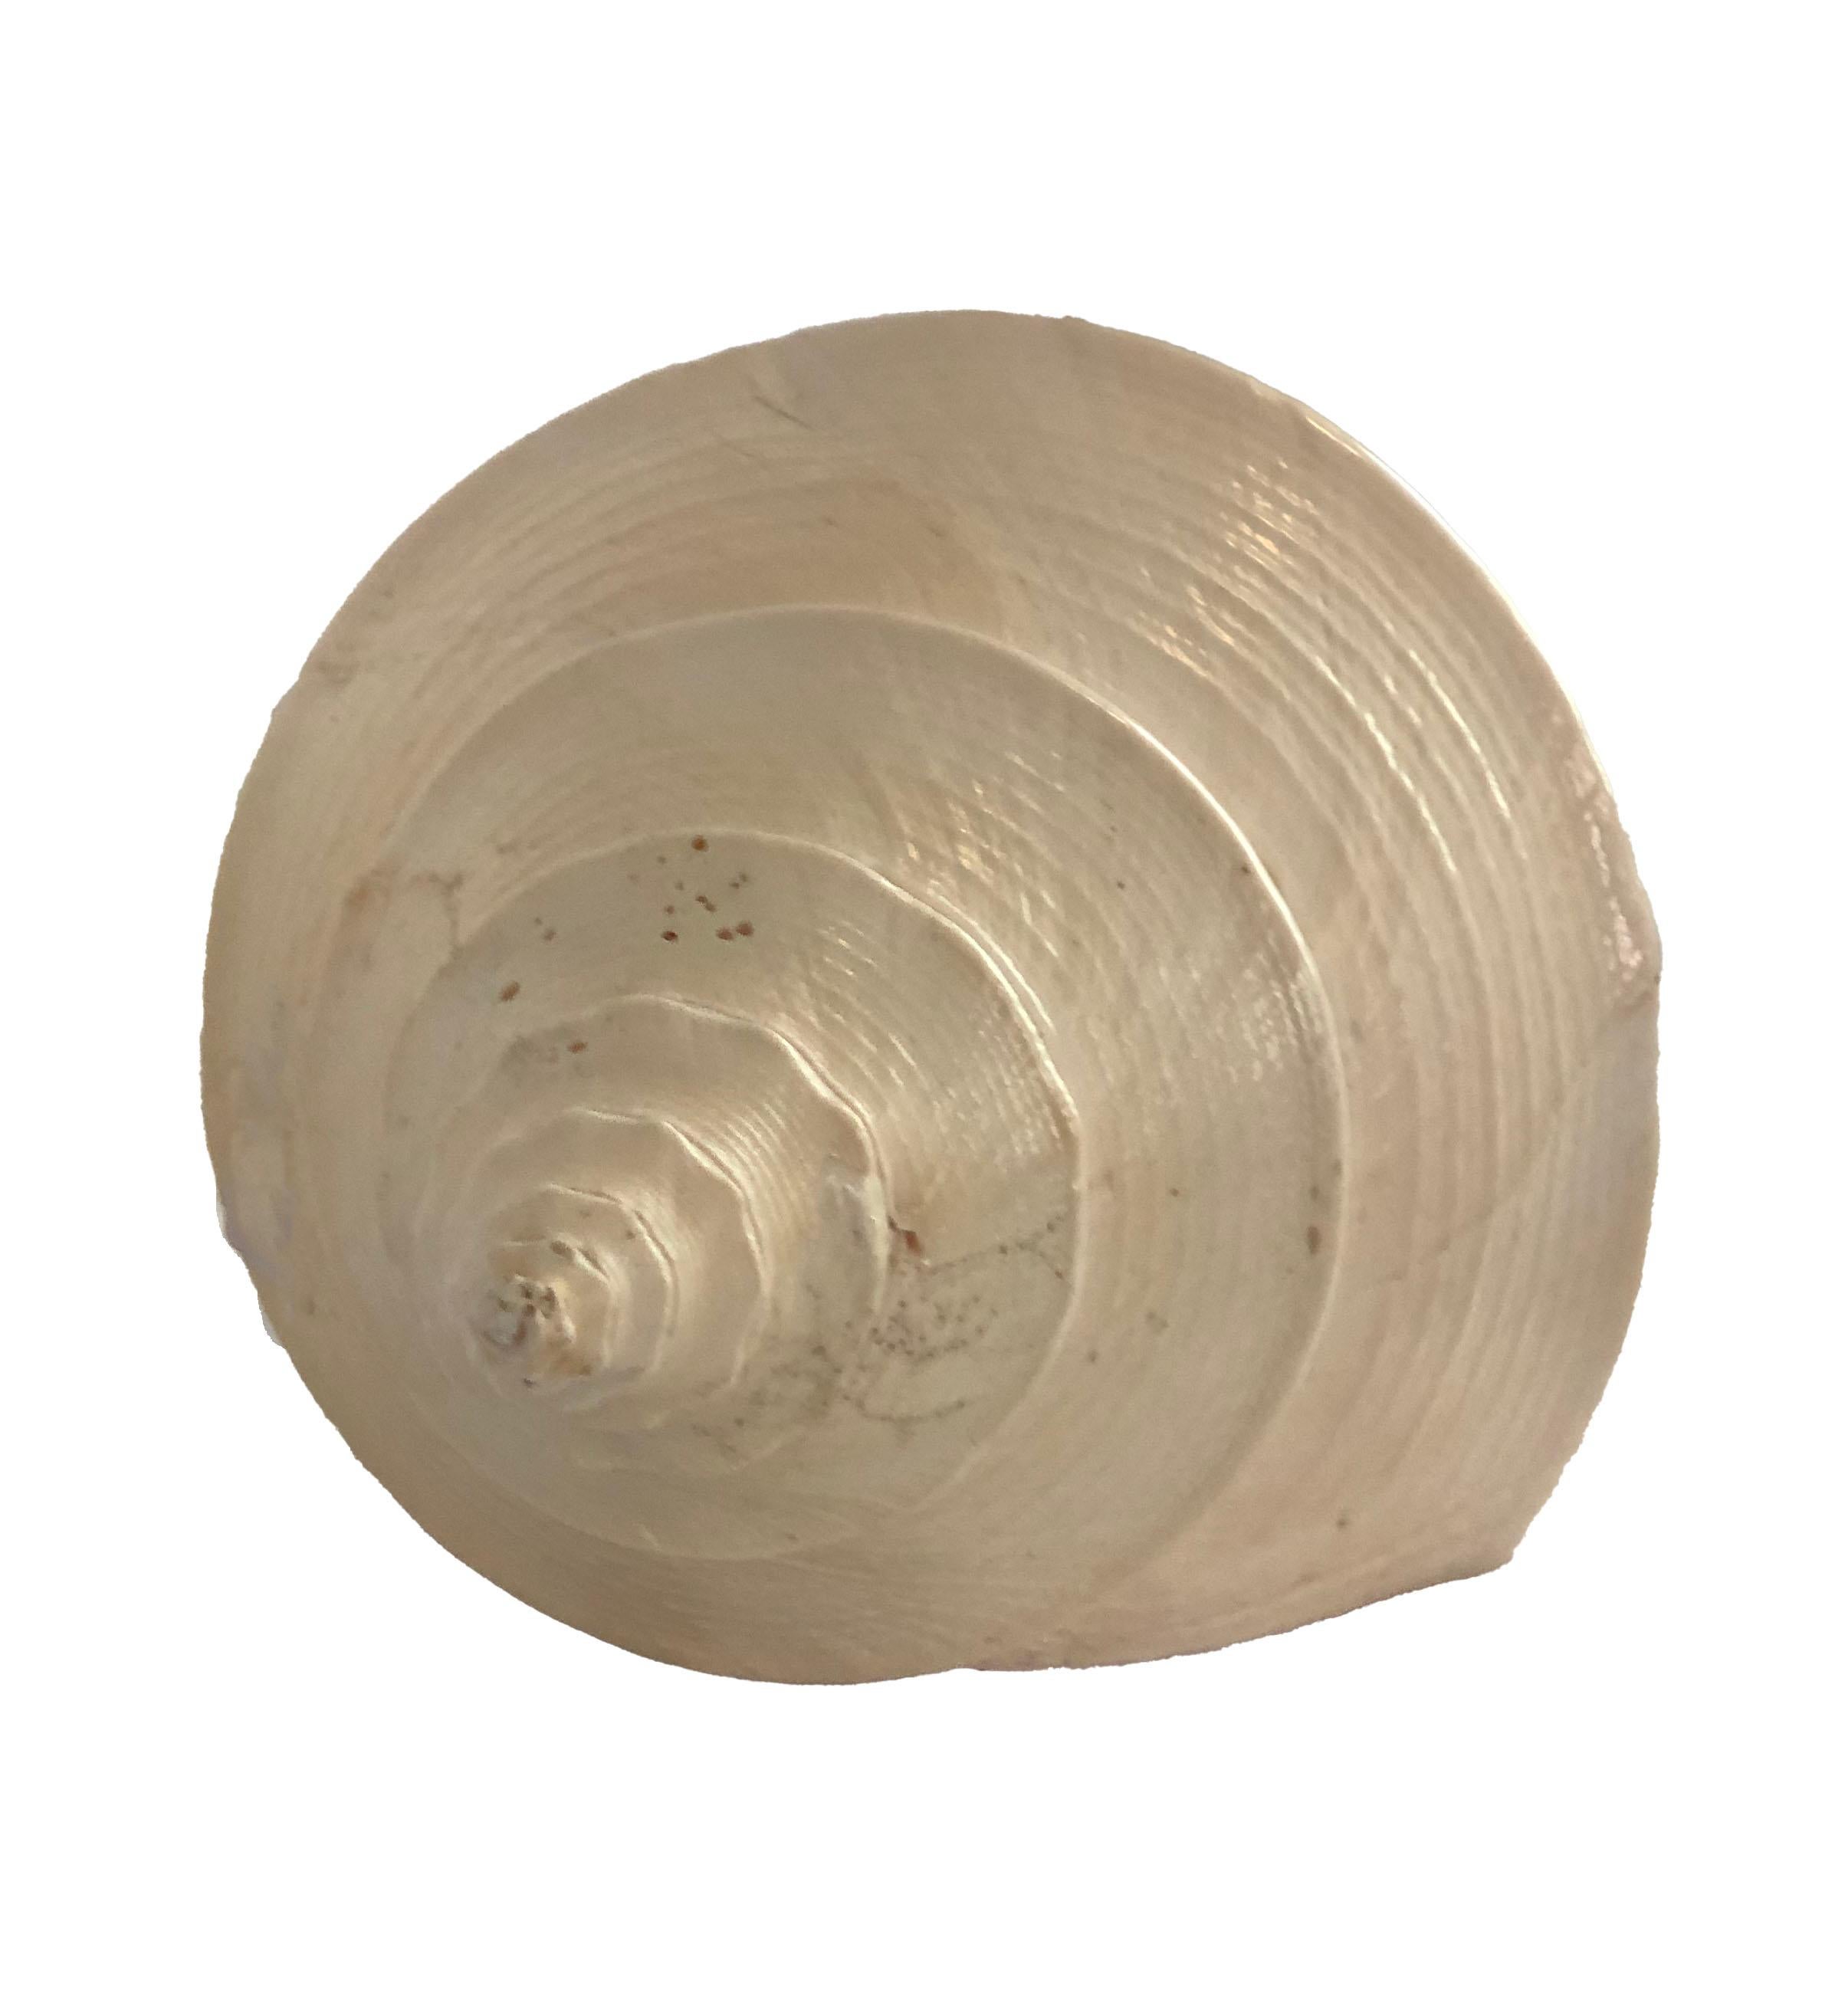 This seashell measures an impressive 20